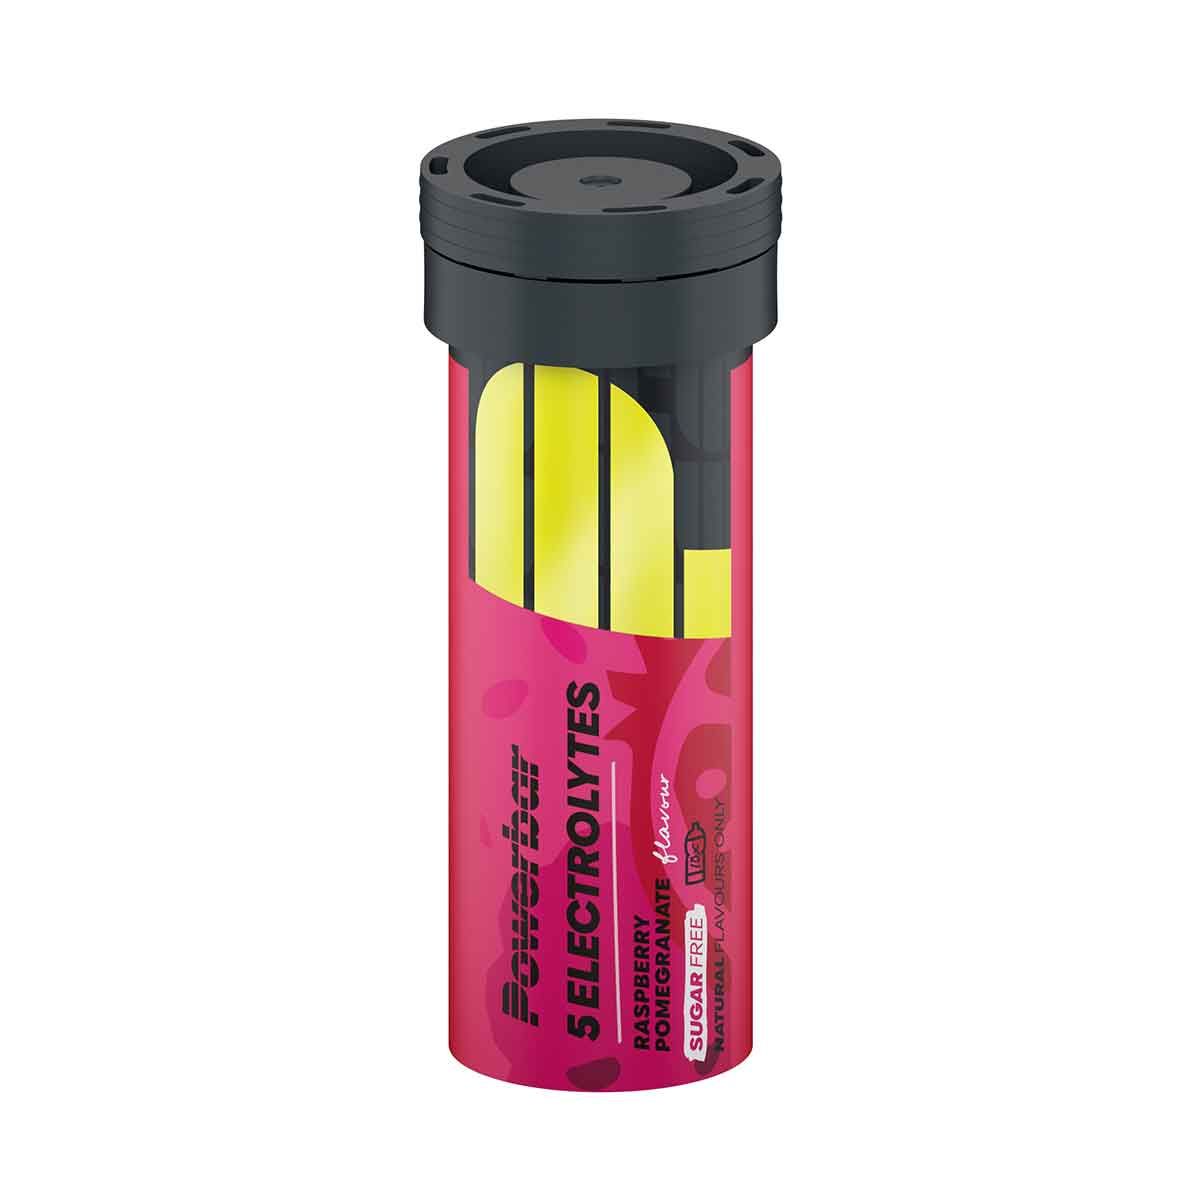 Tube de pastilles électrolytes Powerbar - Framboise, grenade